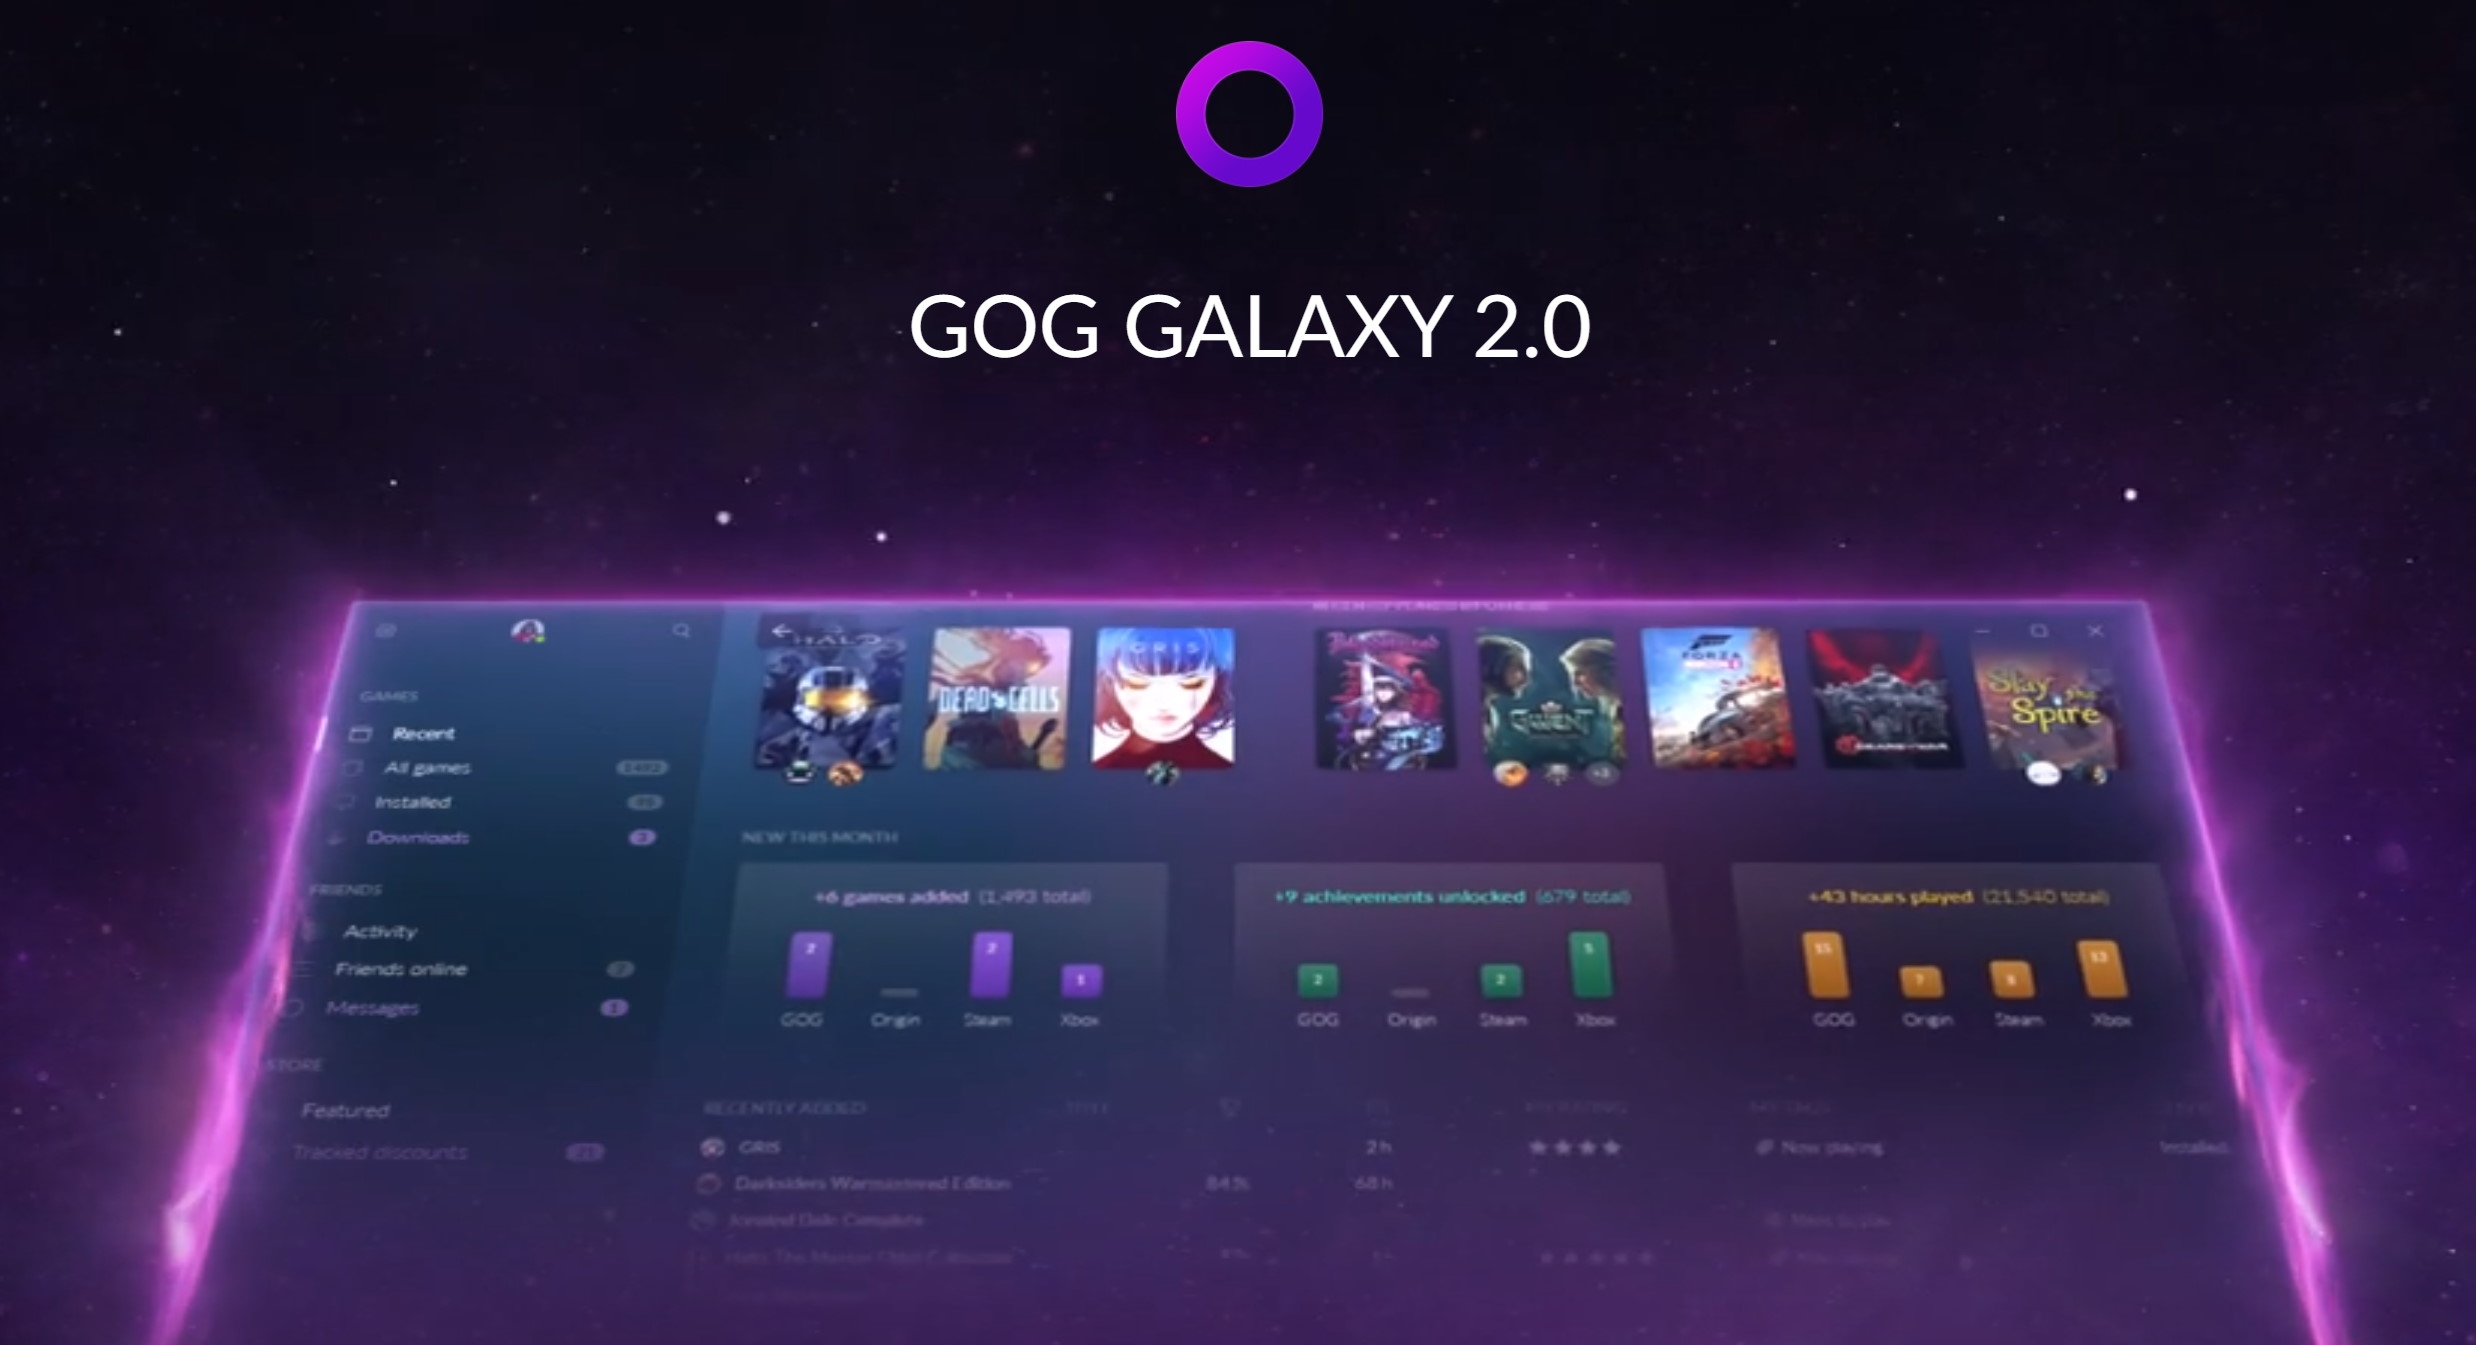 instal the last version for ios GOG Galaxy 2.0.68.112